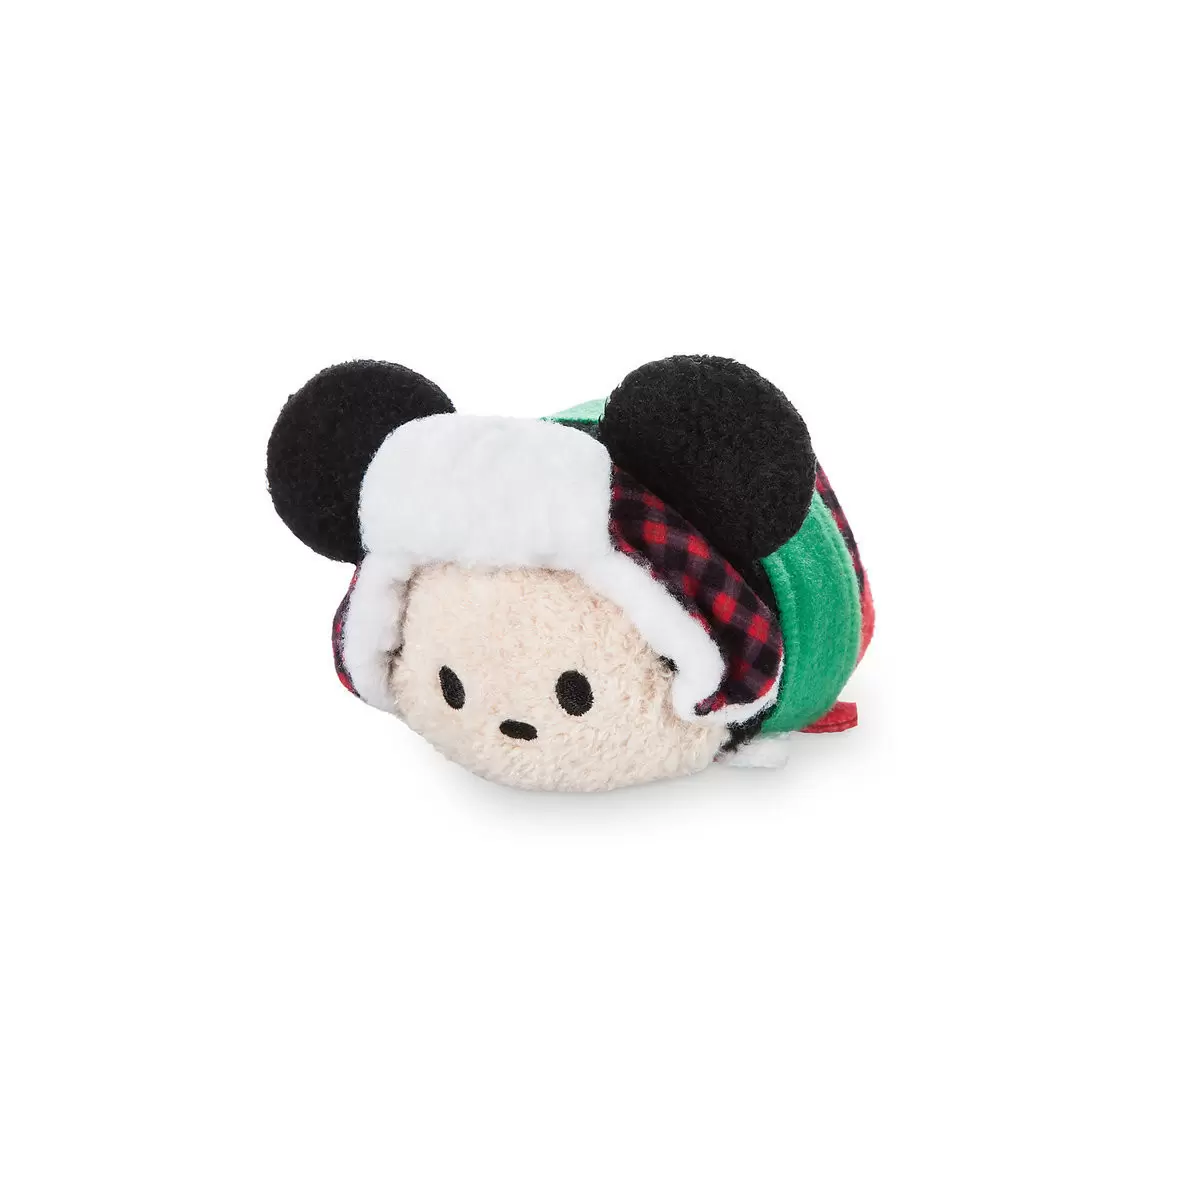 Mini Tsum Tsum Plush - Mickey and Friends Holiday 2017